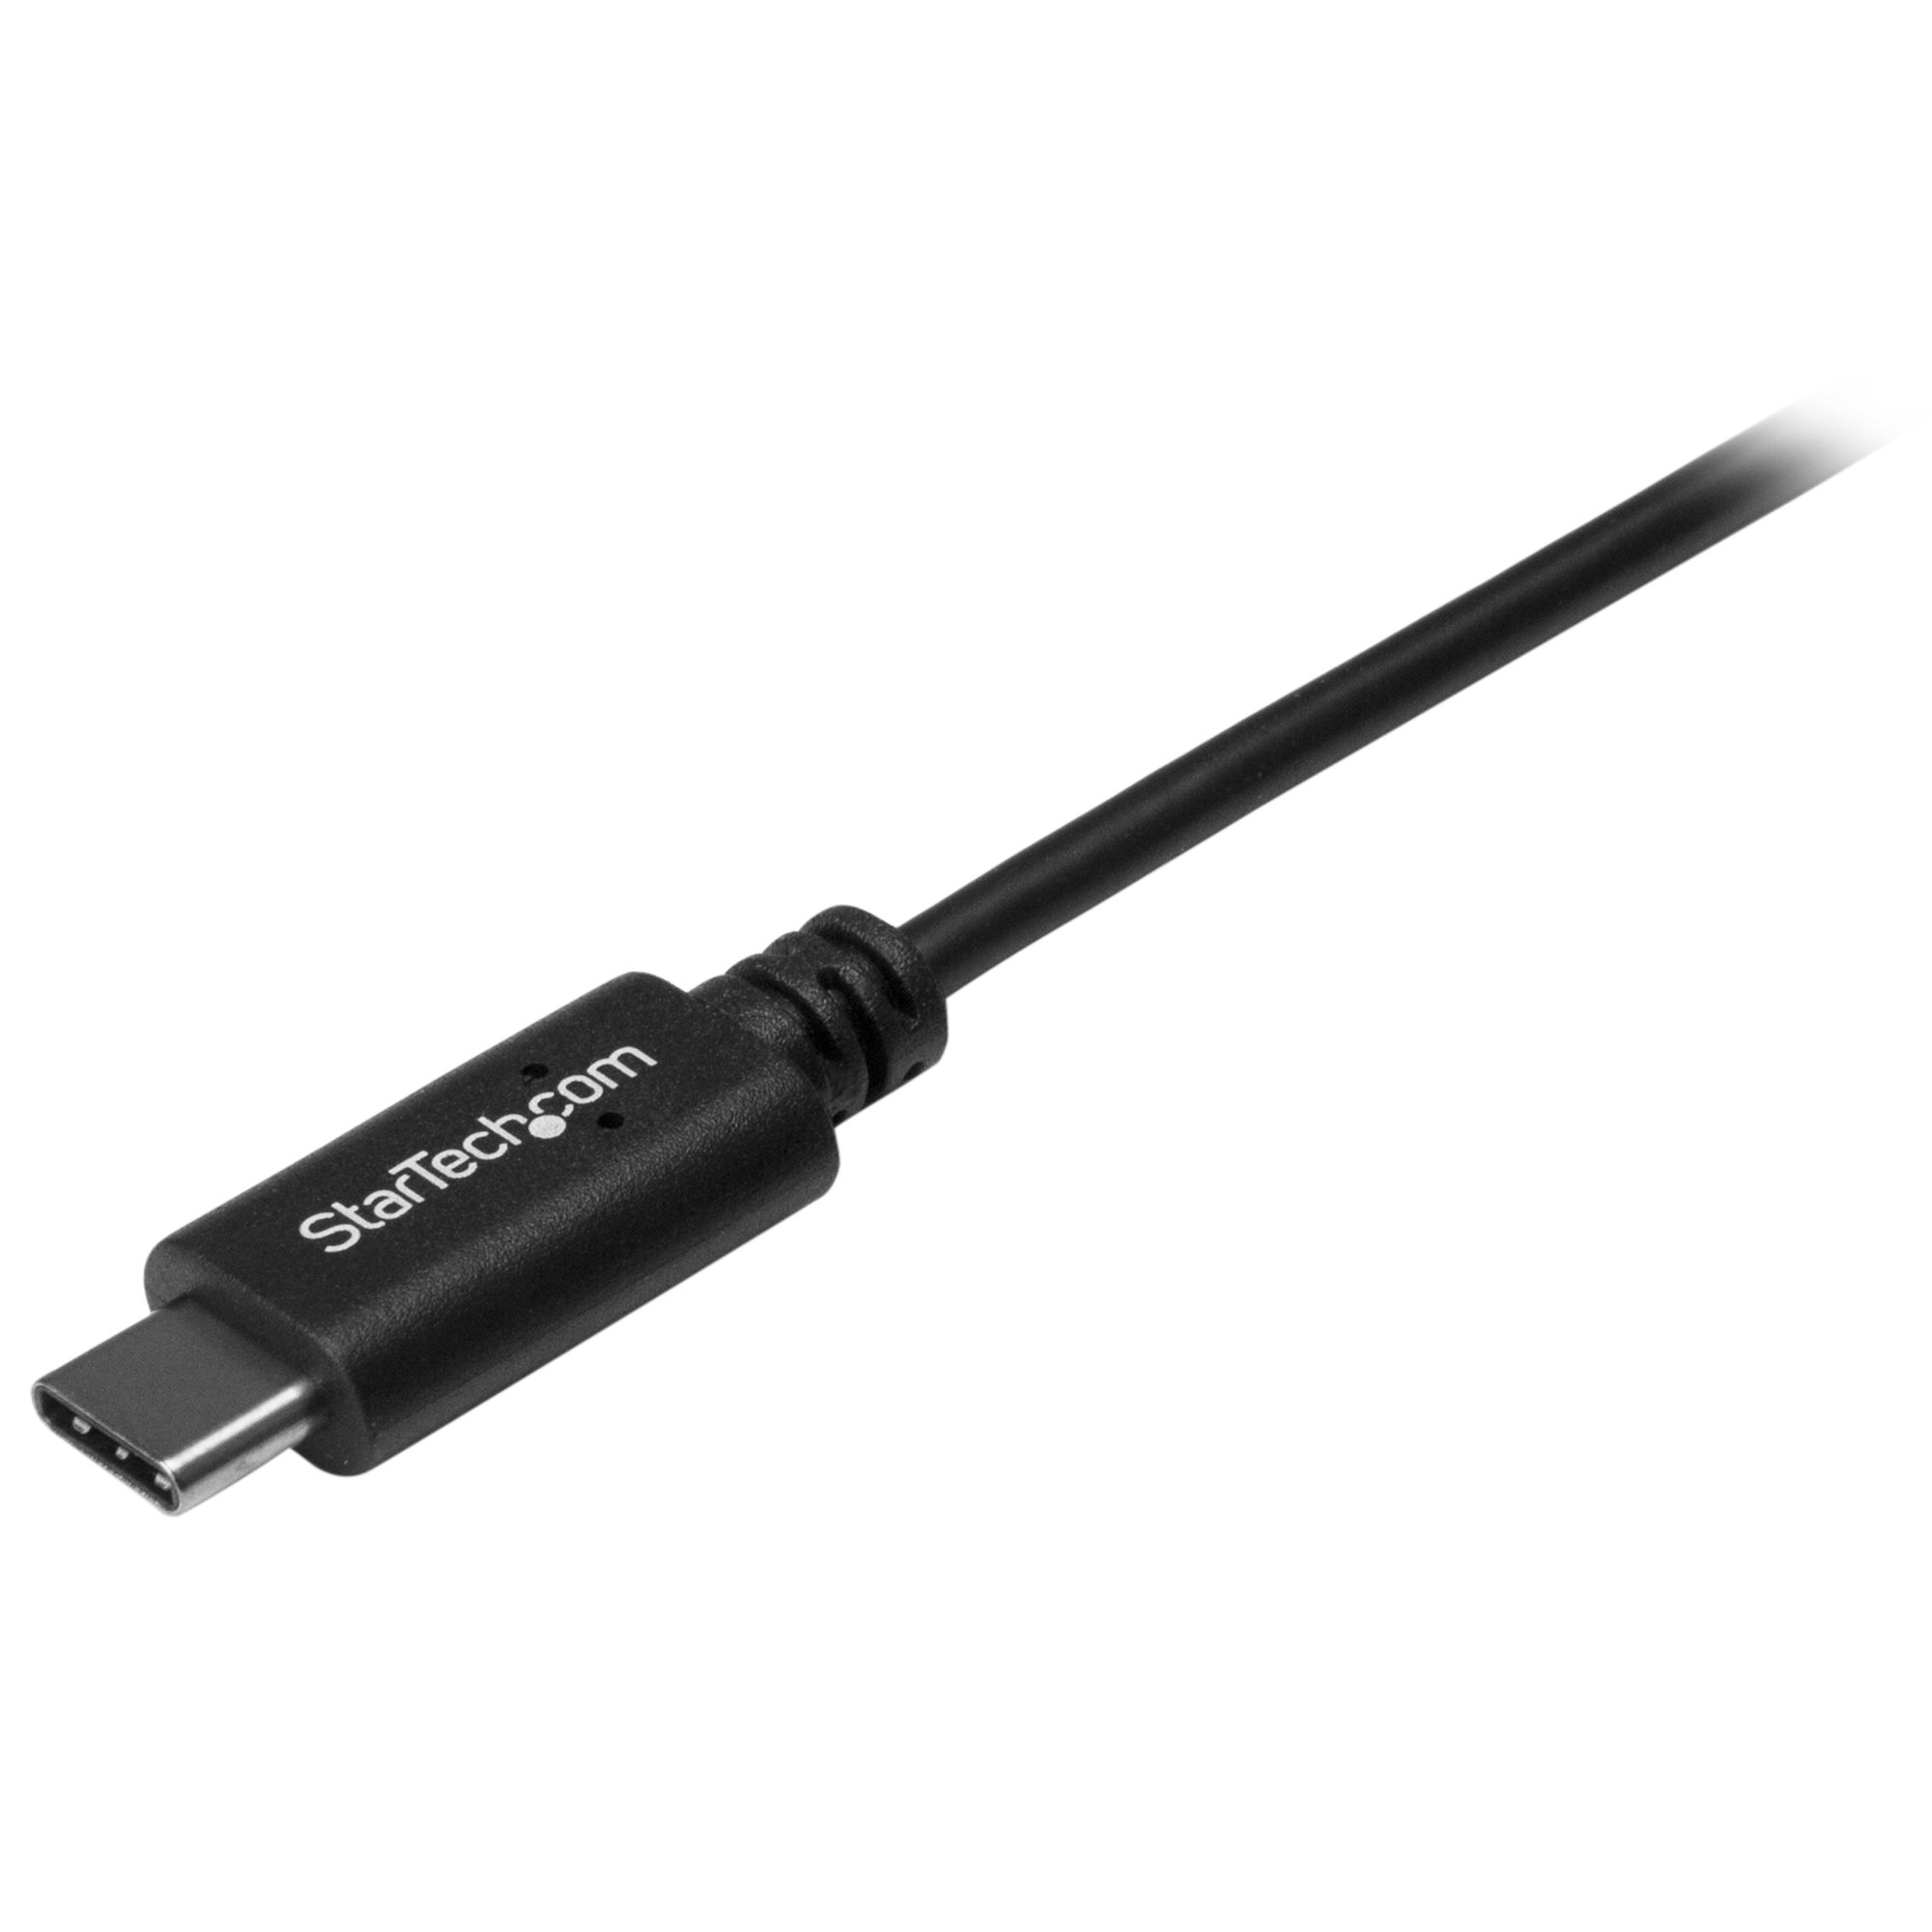 Jane Austen Condensar Catástrofe Cable - USBC to USB A - 1m 3 ft - USB-C Cables | StarTech.com